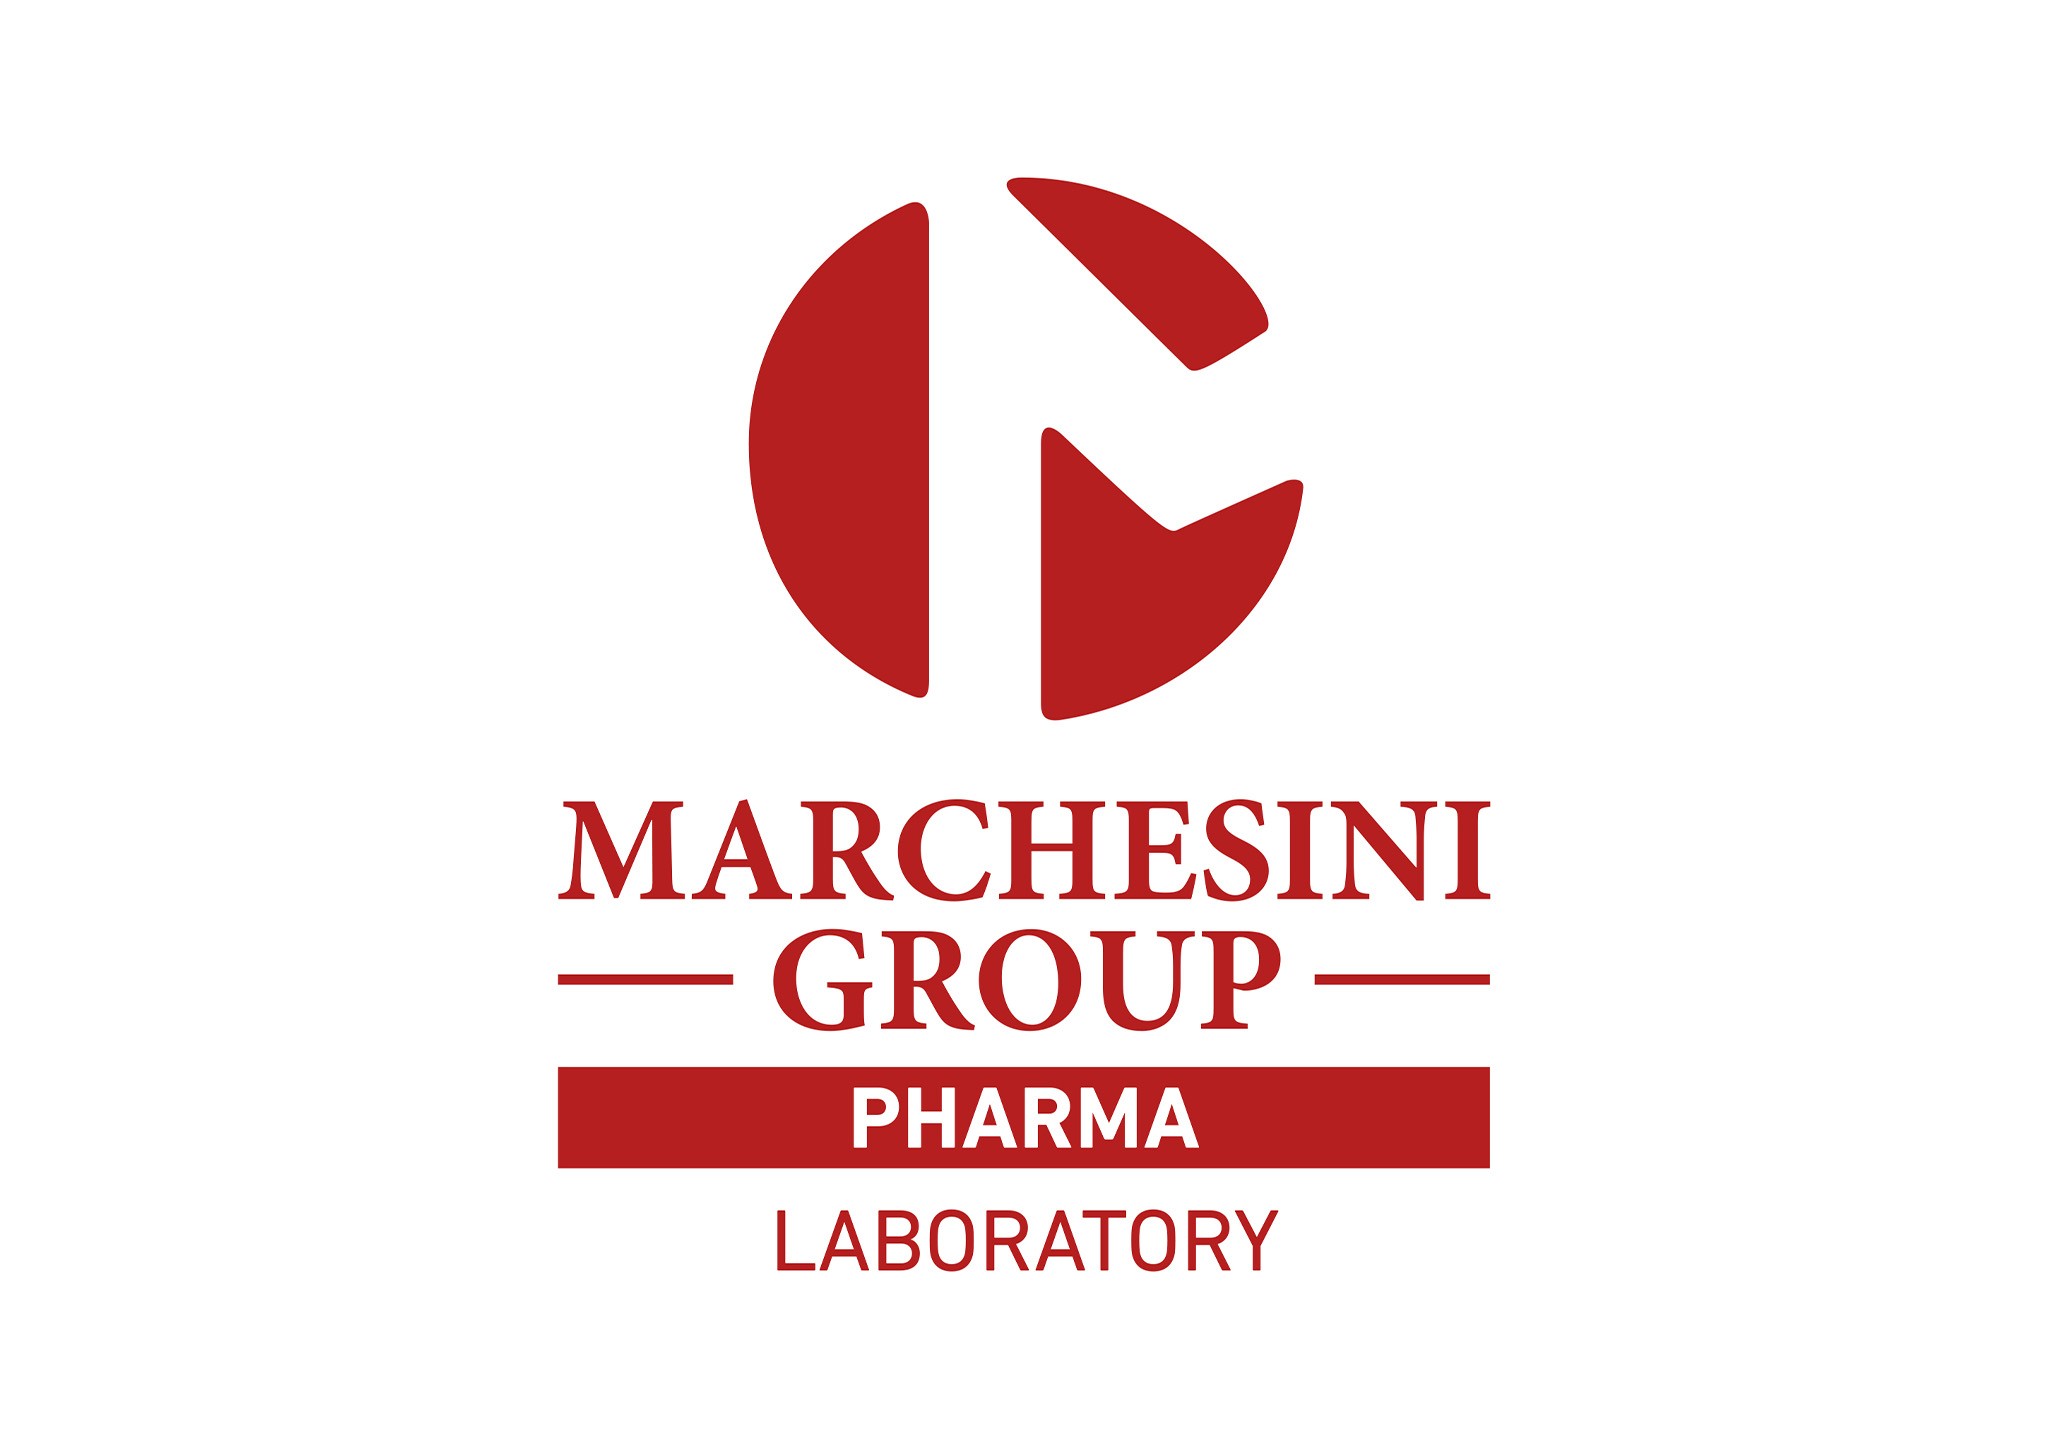 MG_Pharma_Laboratory_logo